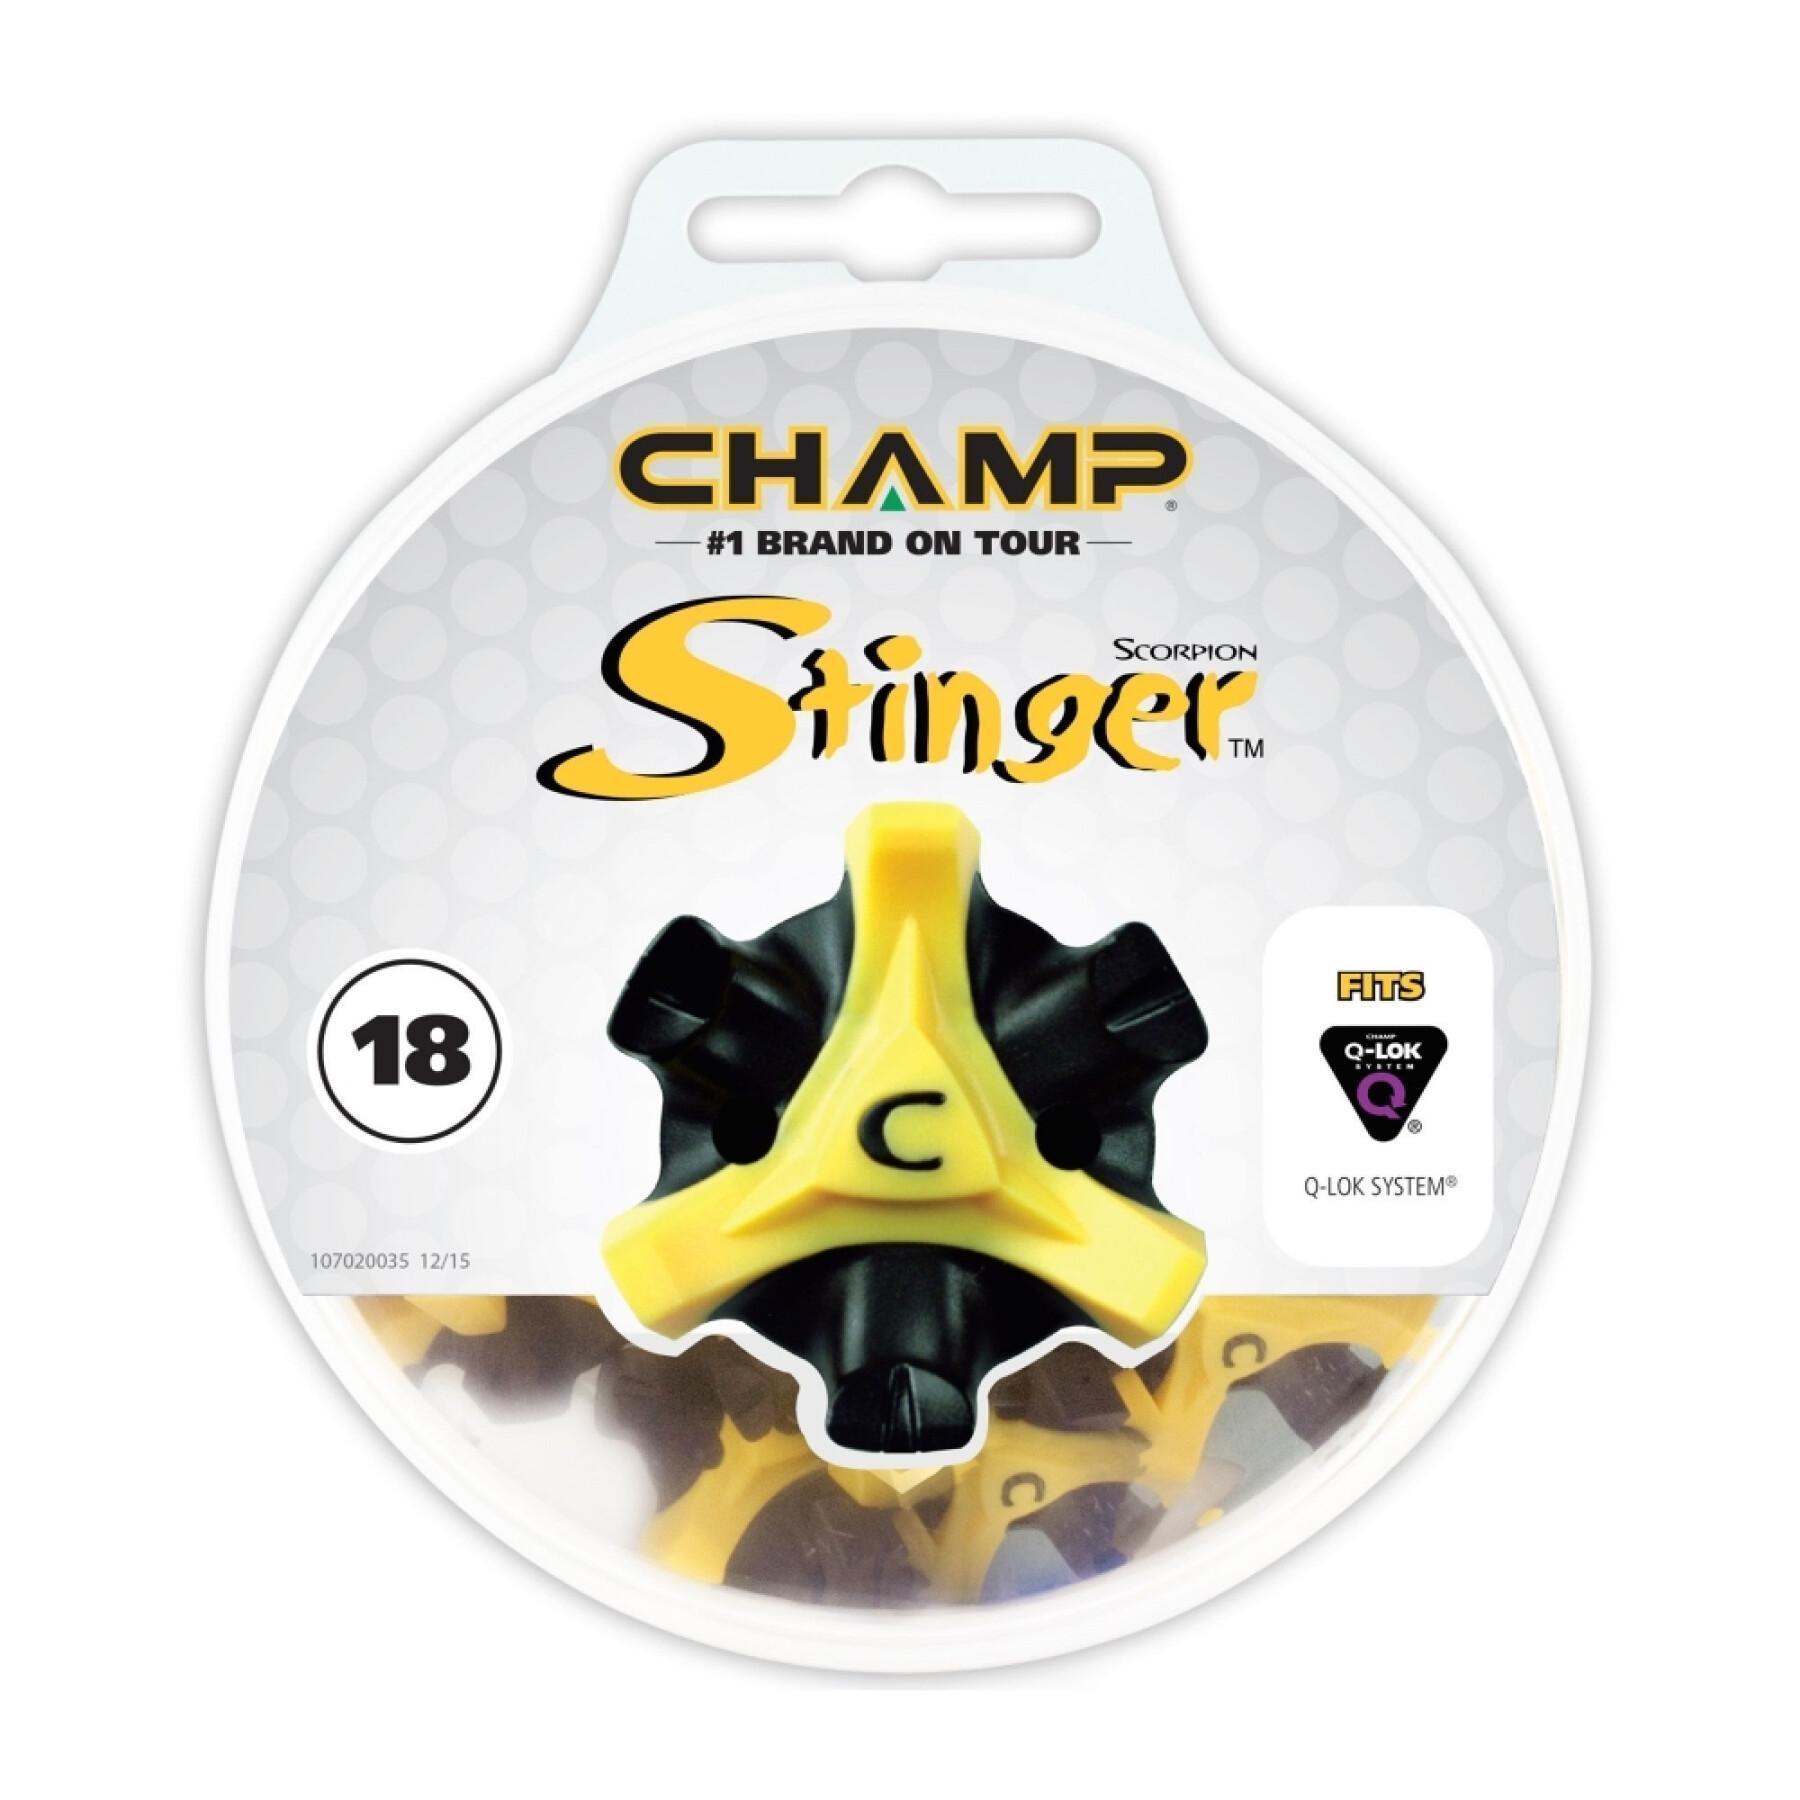 Abrazadera Champ Stinger fast twist 3,0 disk